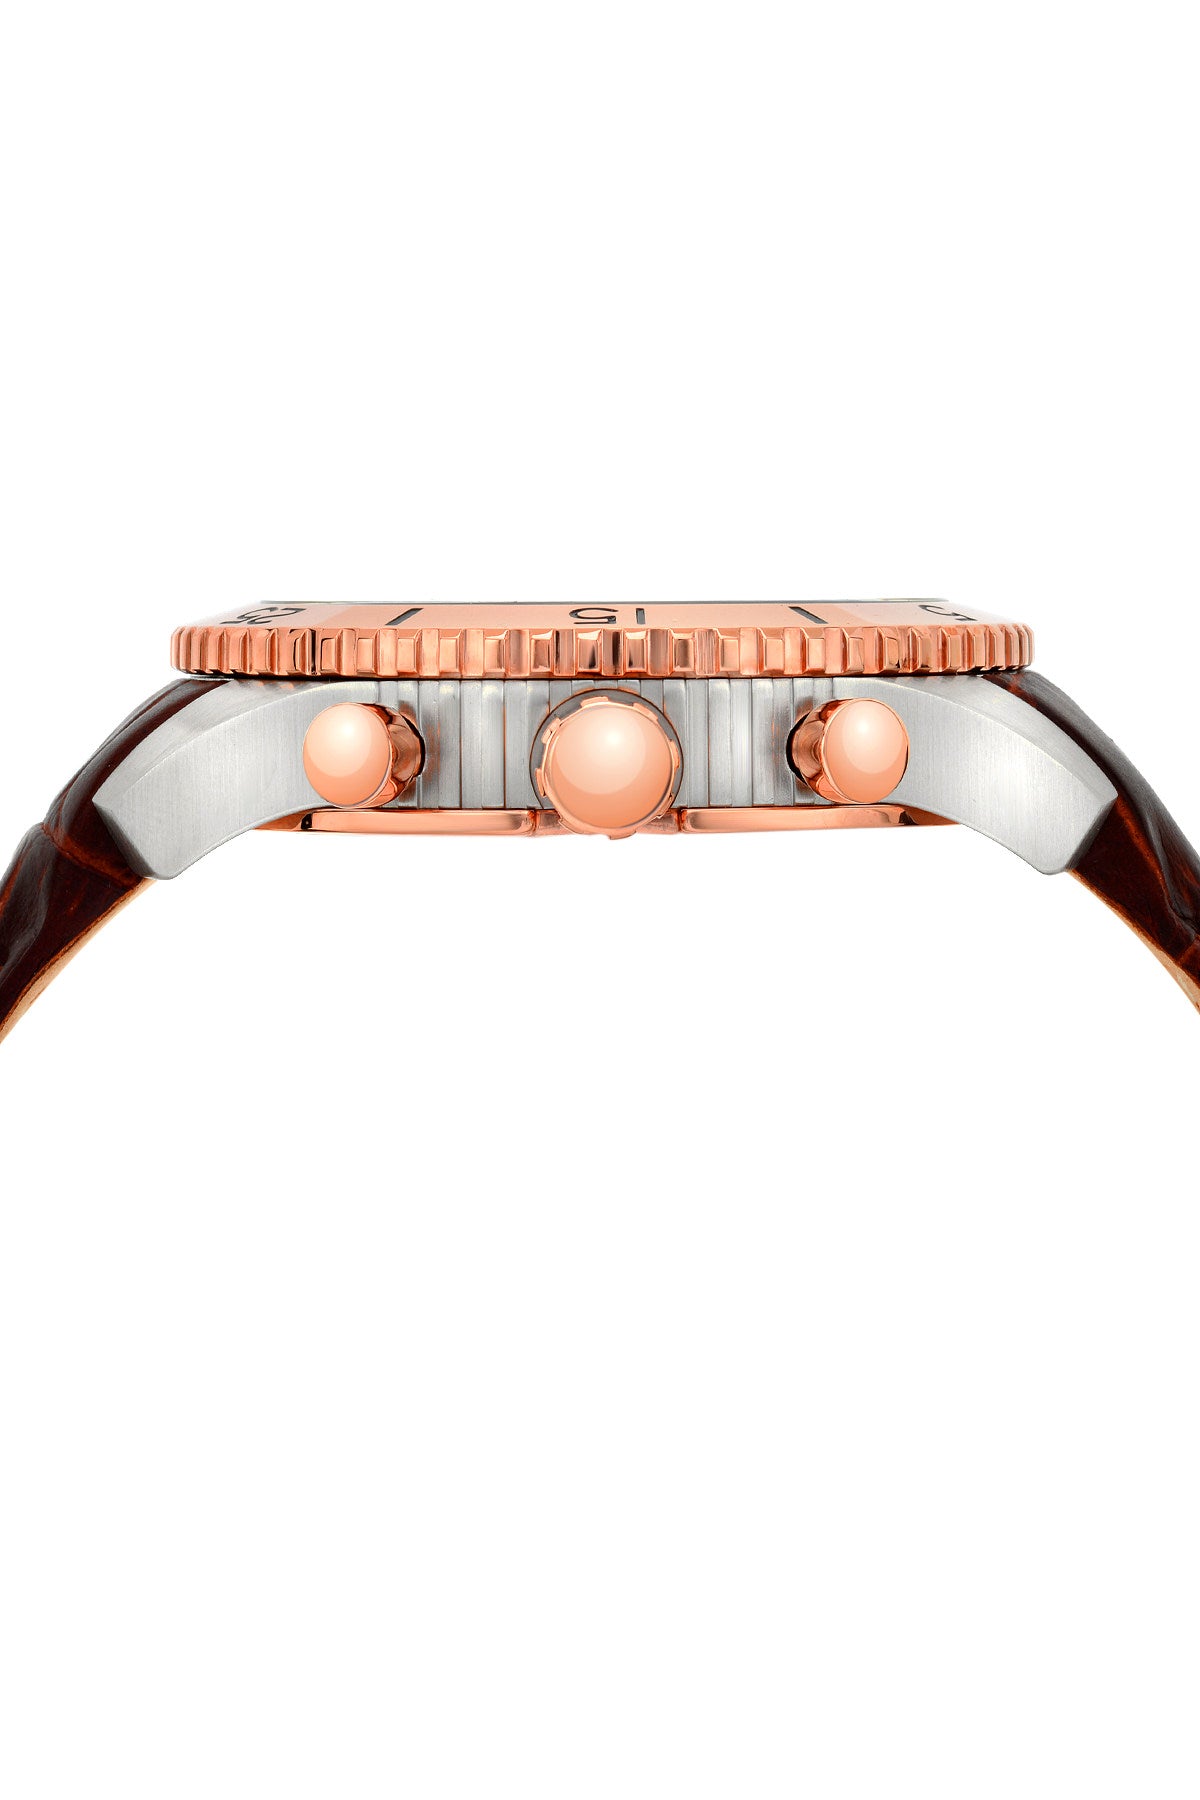 Porsamo Bleu Tristan luxury chronograph men's watch, genuine leather band, gold, silver, brown 592CTRL